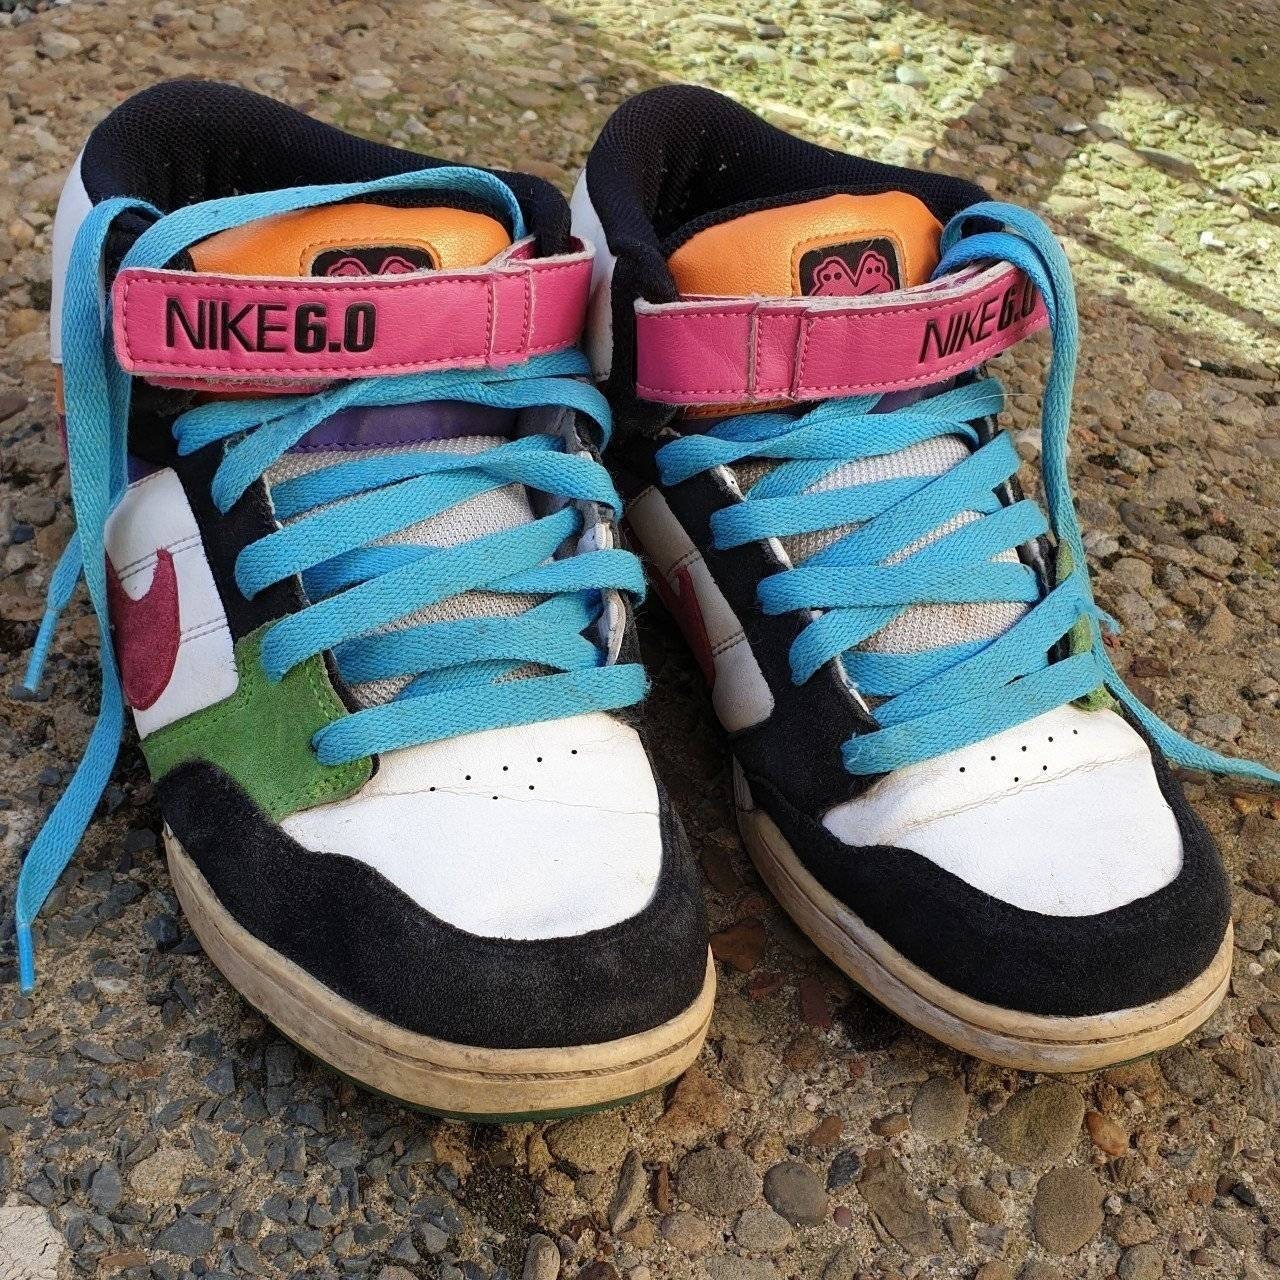 enviar perecer Bastante Vintage Nike 6.0 bright hightop trainer sneakers skater size 7 - Etsy España